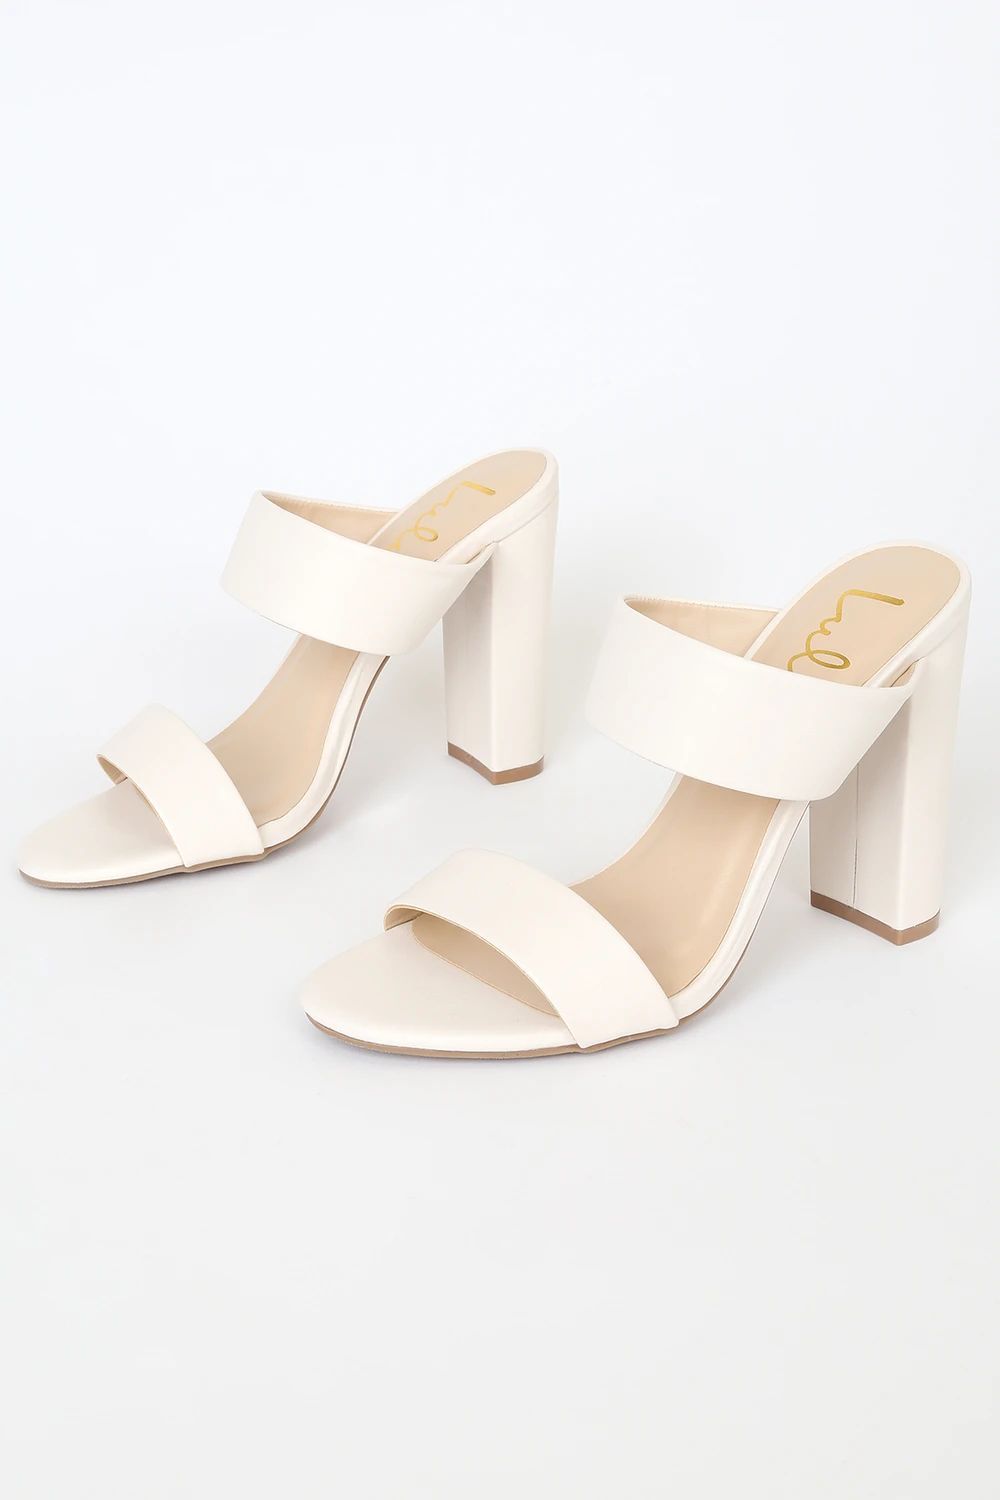 Marlowe Off White High Heel Sandals | Lulus (US)